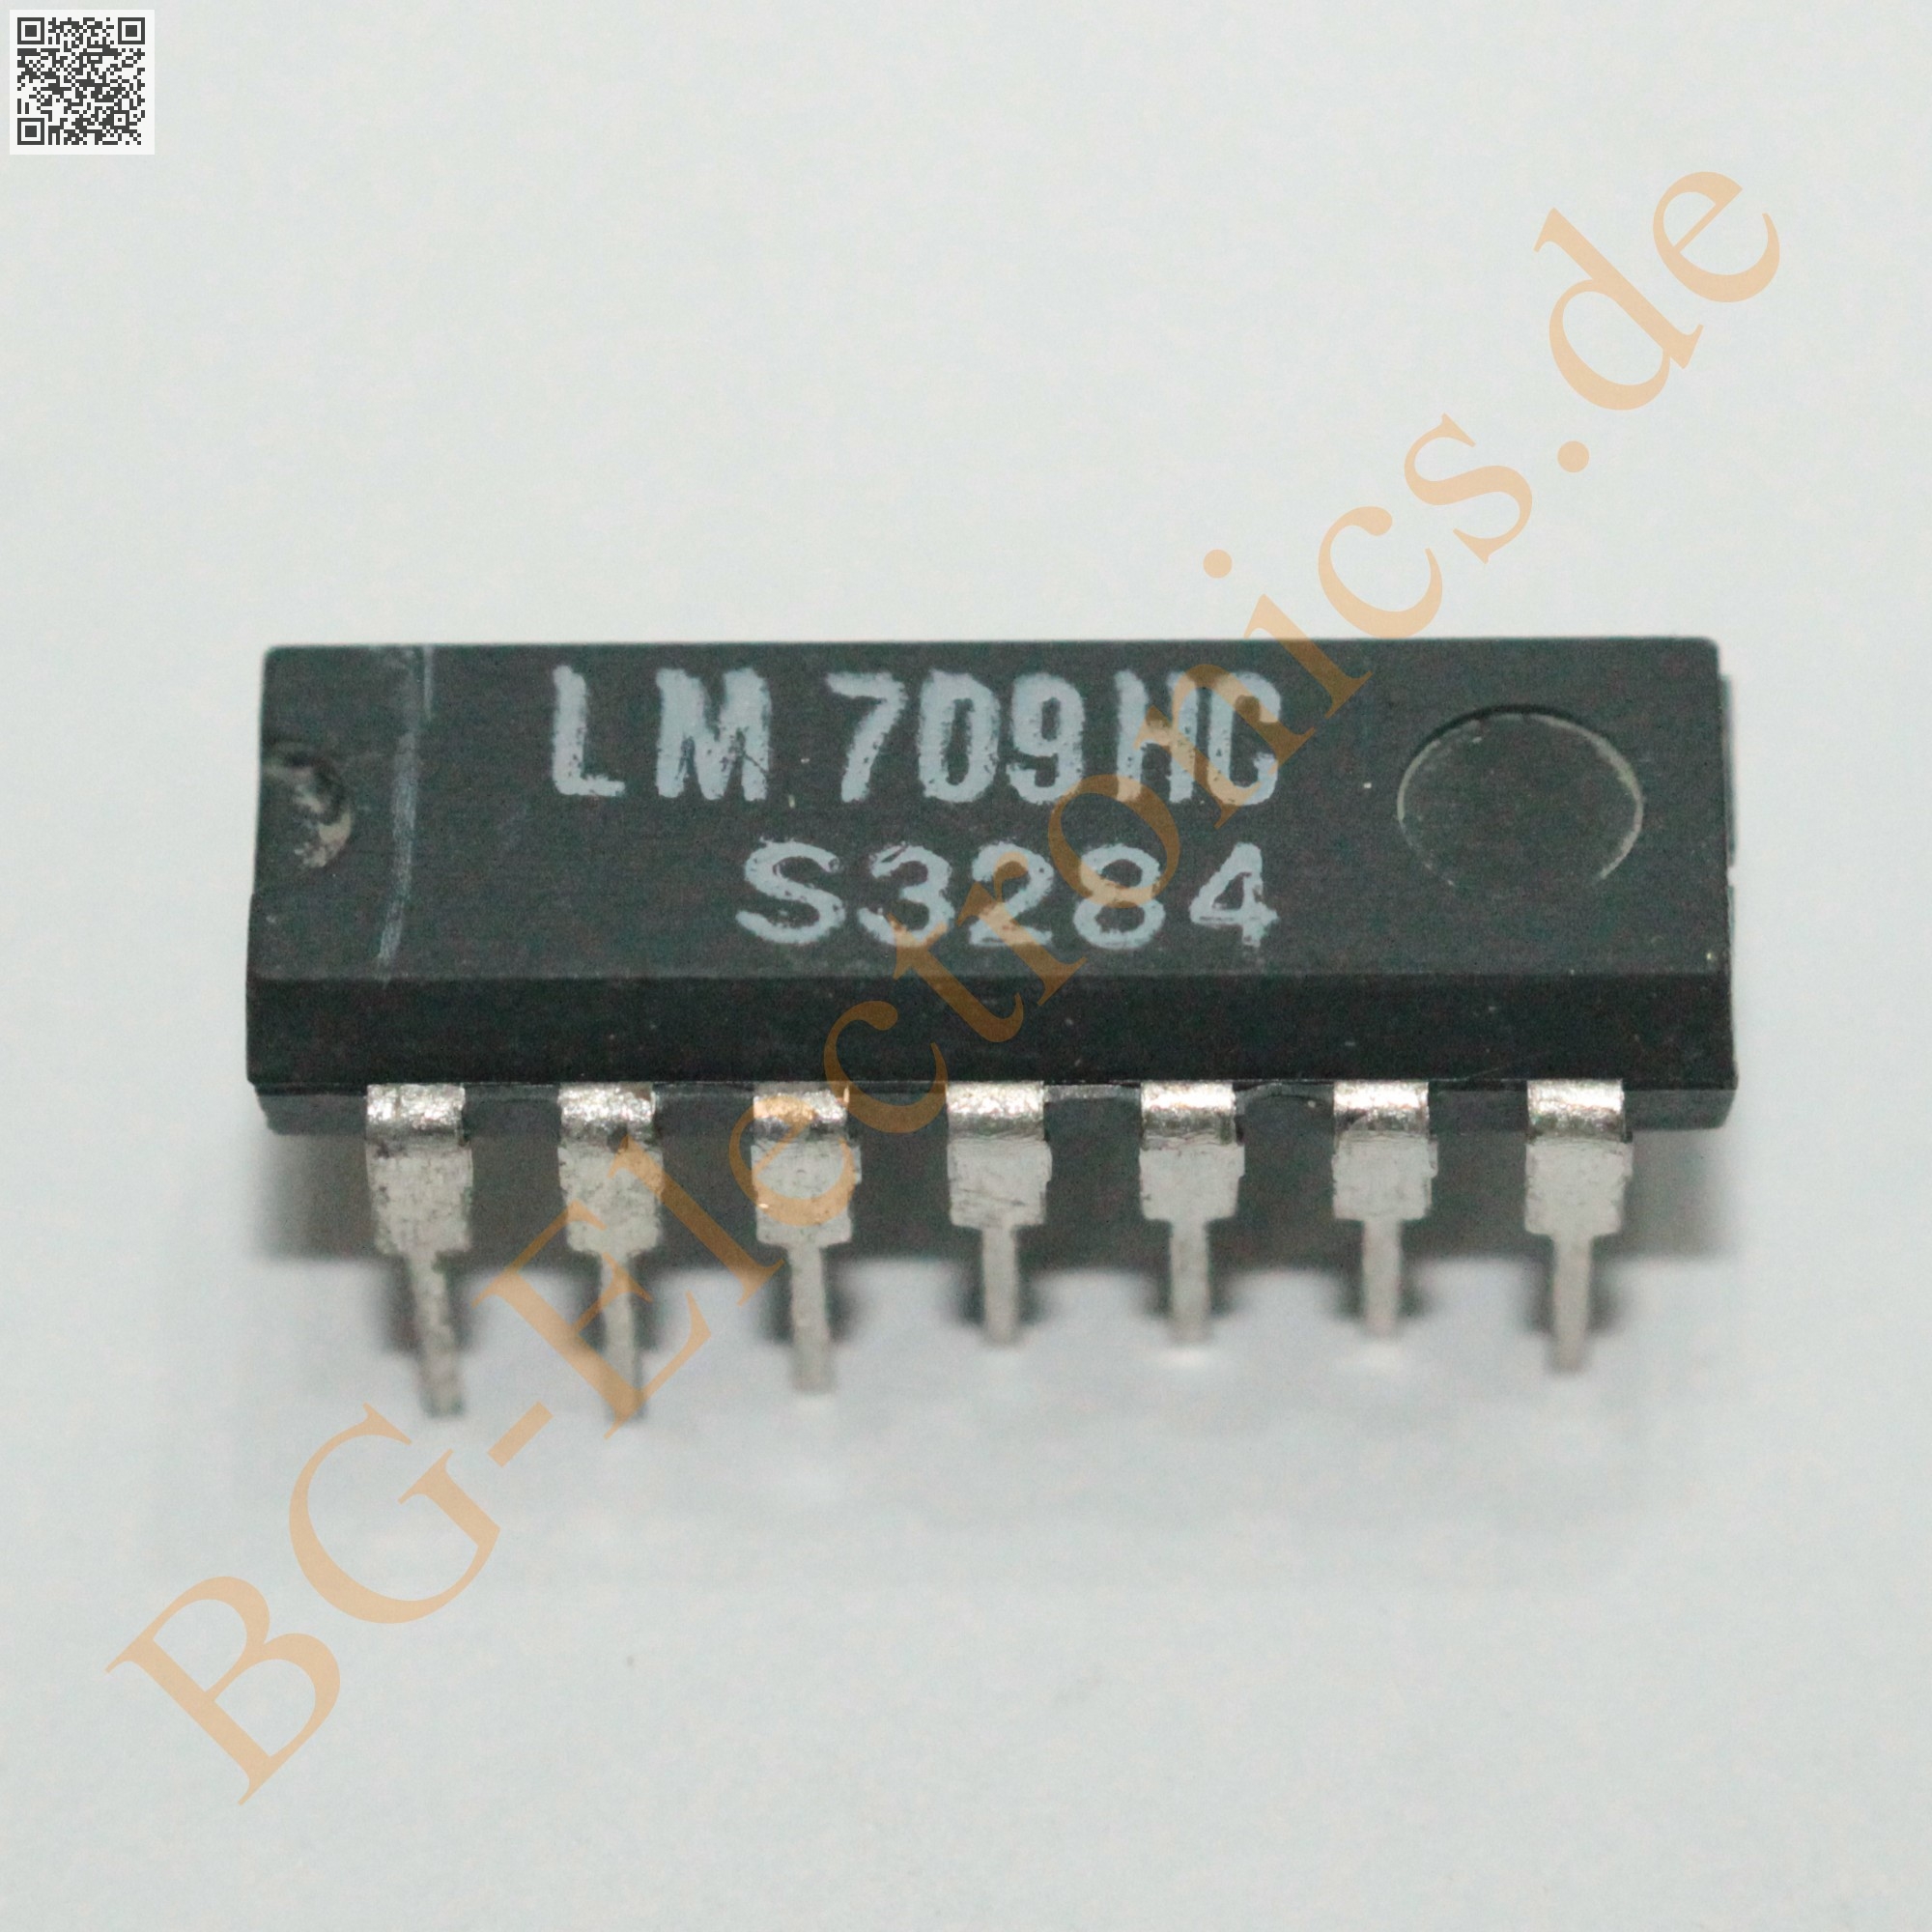 LM709HC